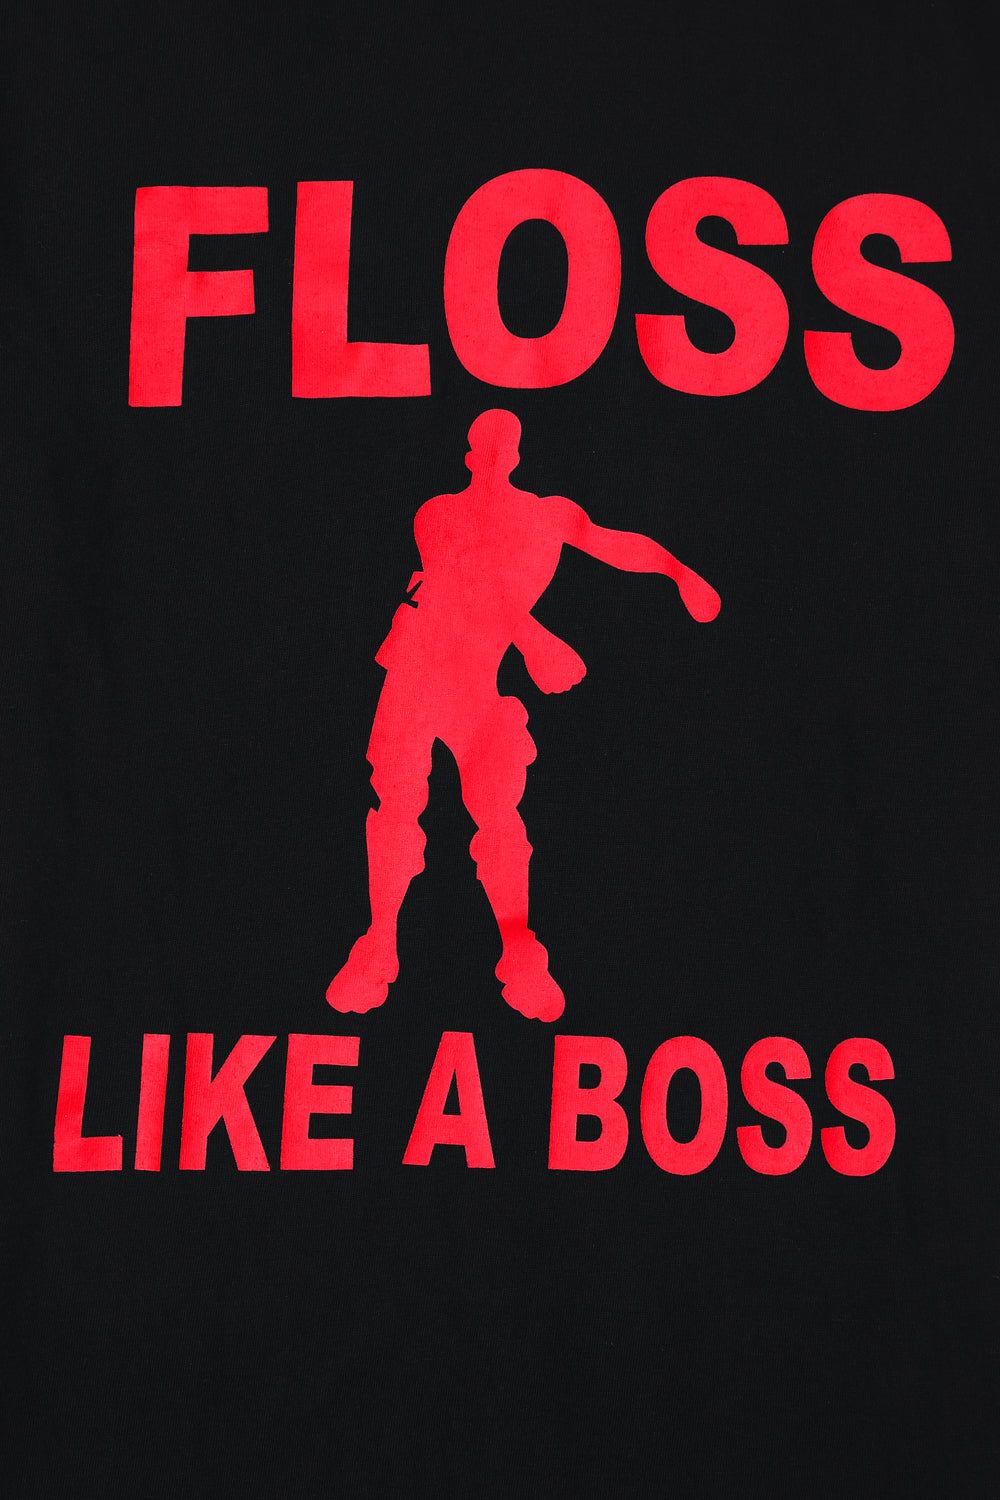 Floss Like a Boss Long Pyjamas - Pyjamas.com